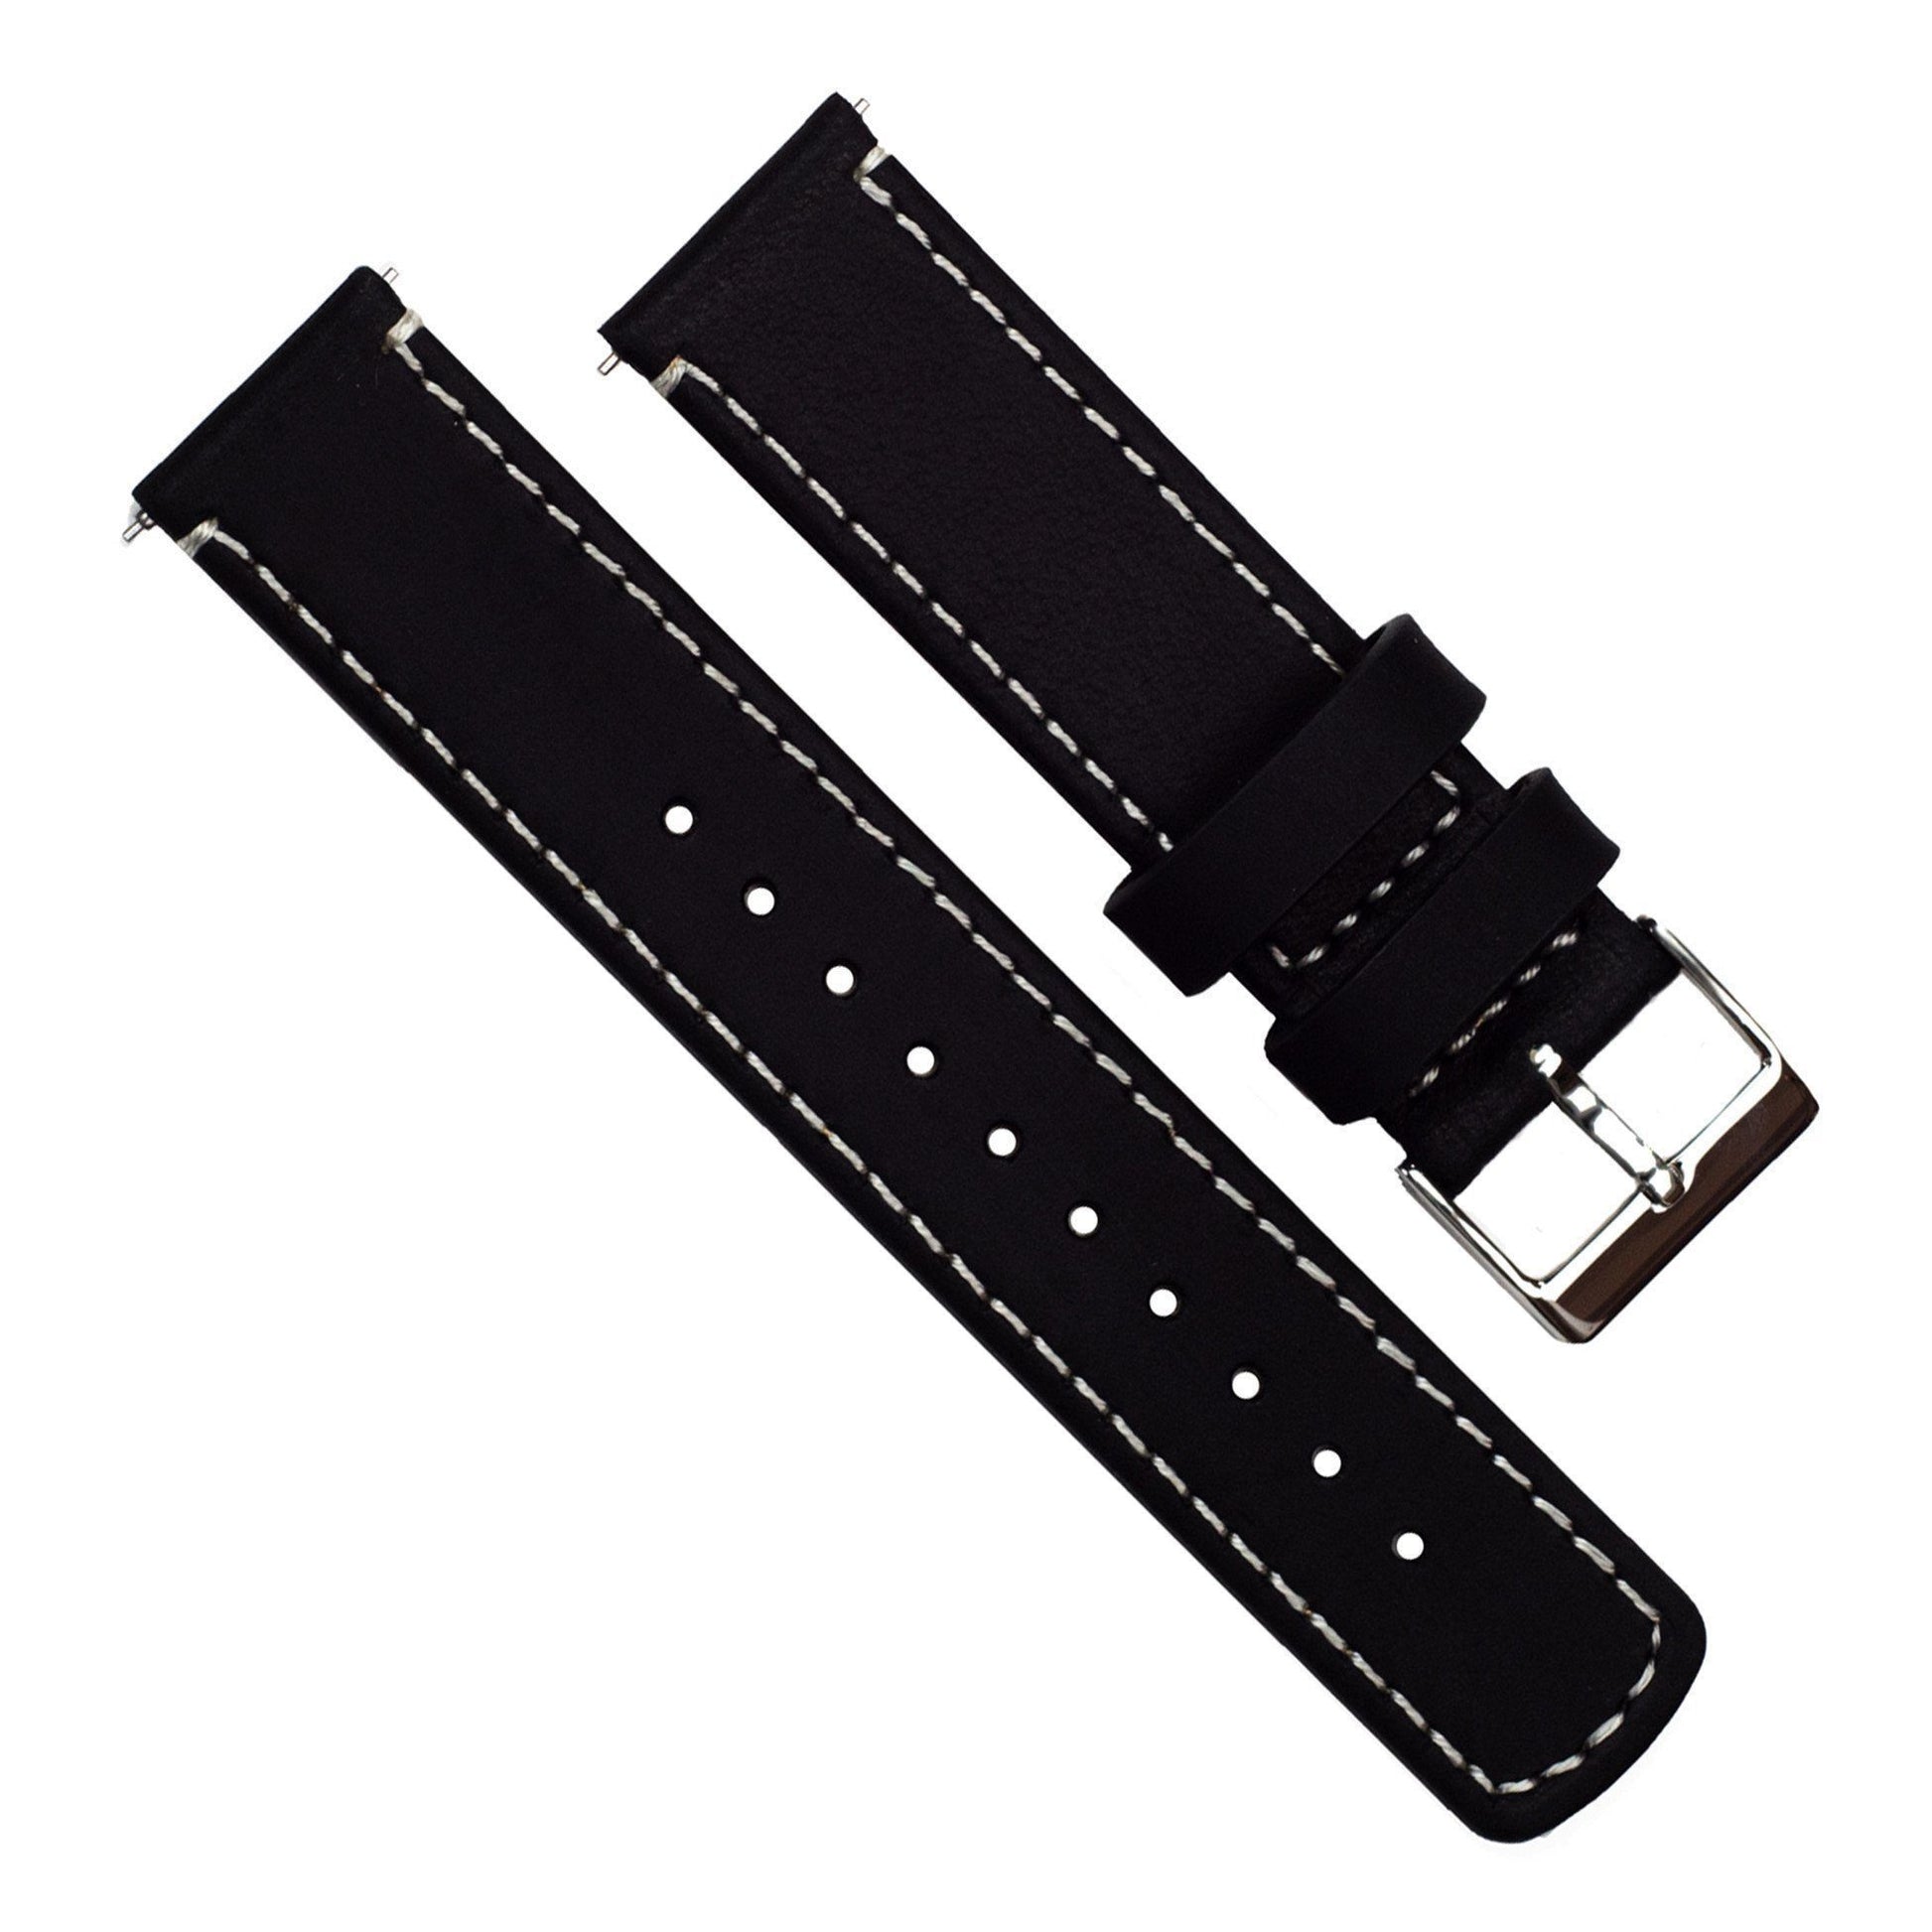 Zenwatch & Zenwatch 2 | Black Leather & Linen White Stitching - Barton Watch Bands